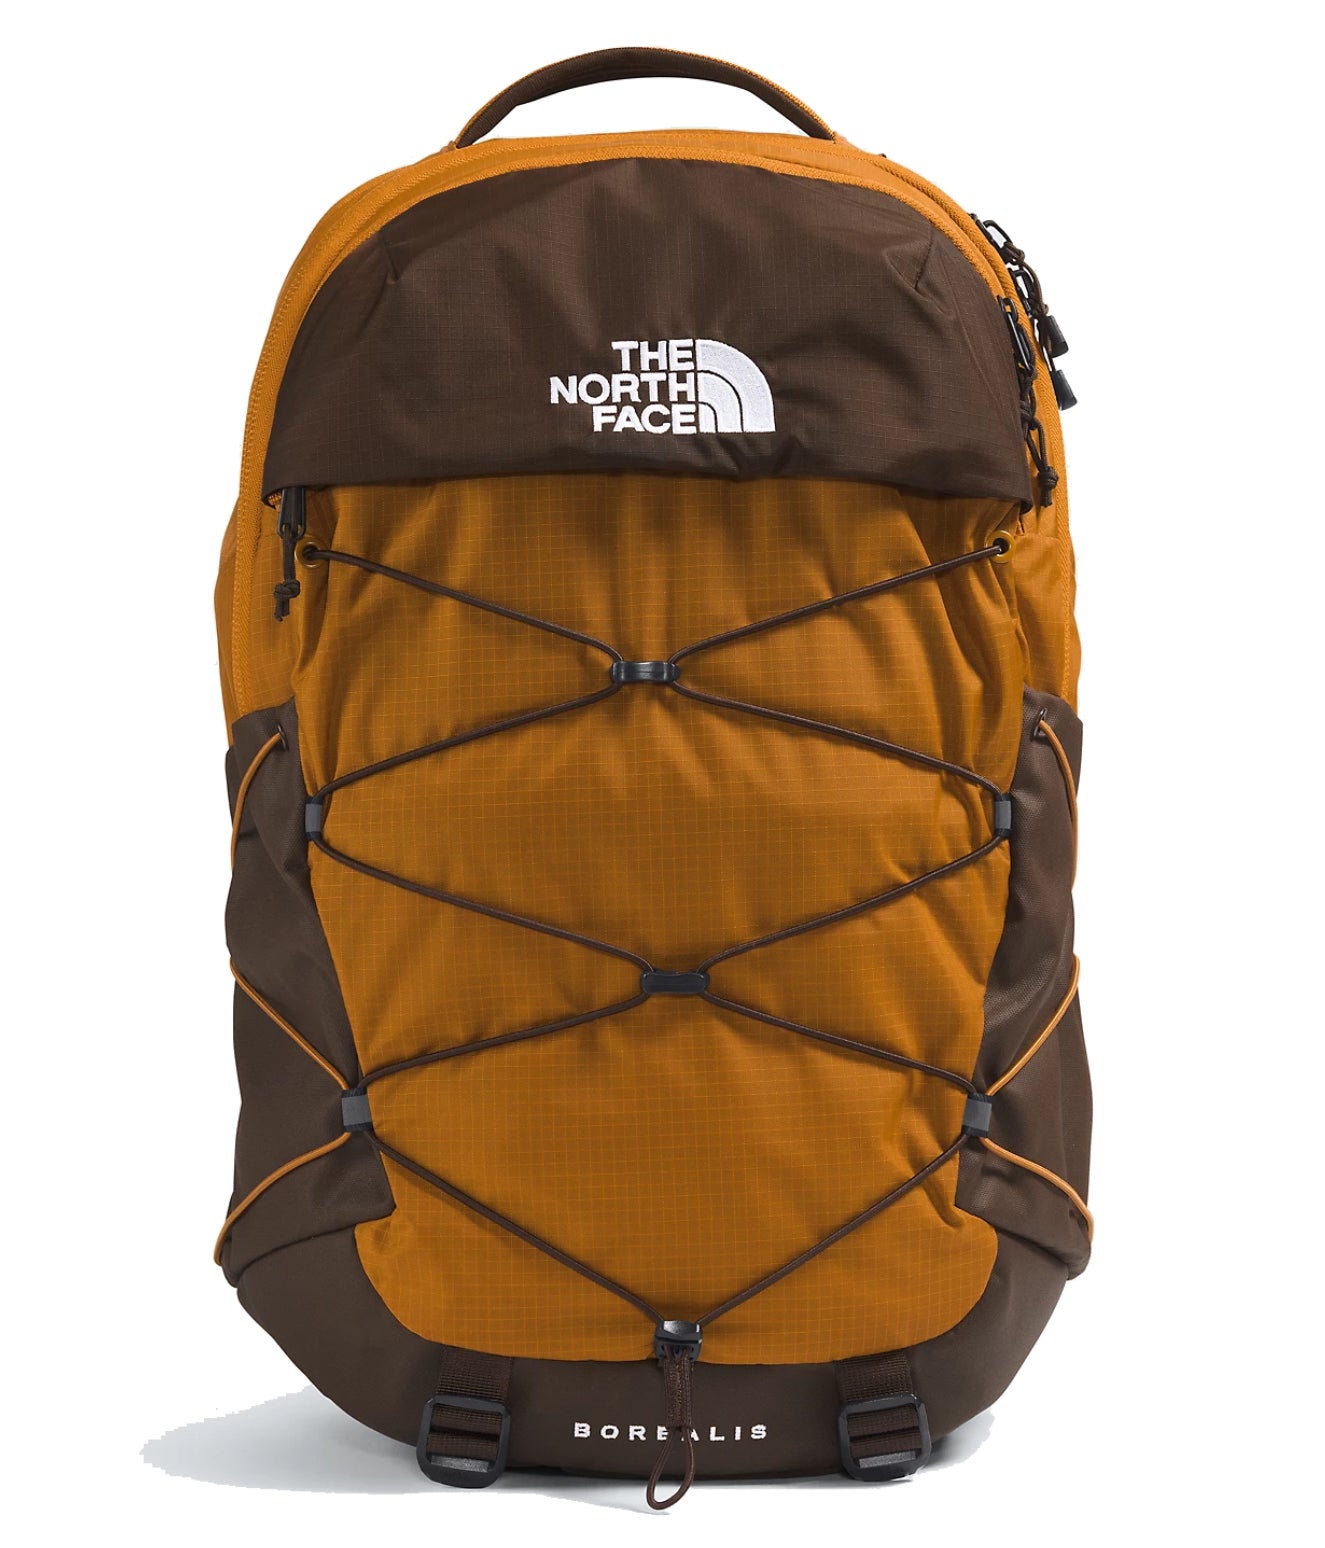 The North Face Borealis Backpack Timber Tan/Demitasse Brown